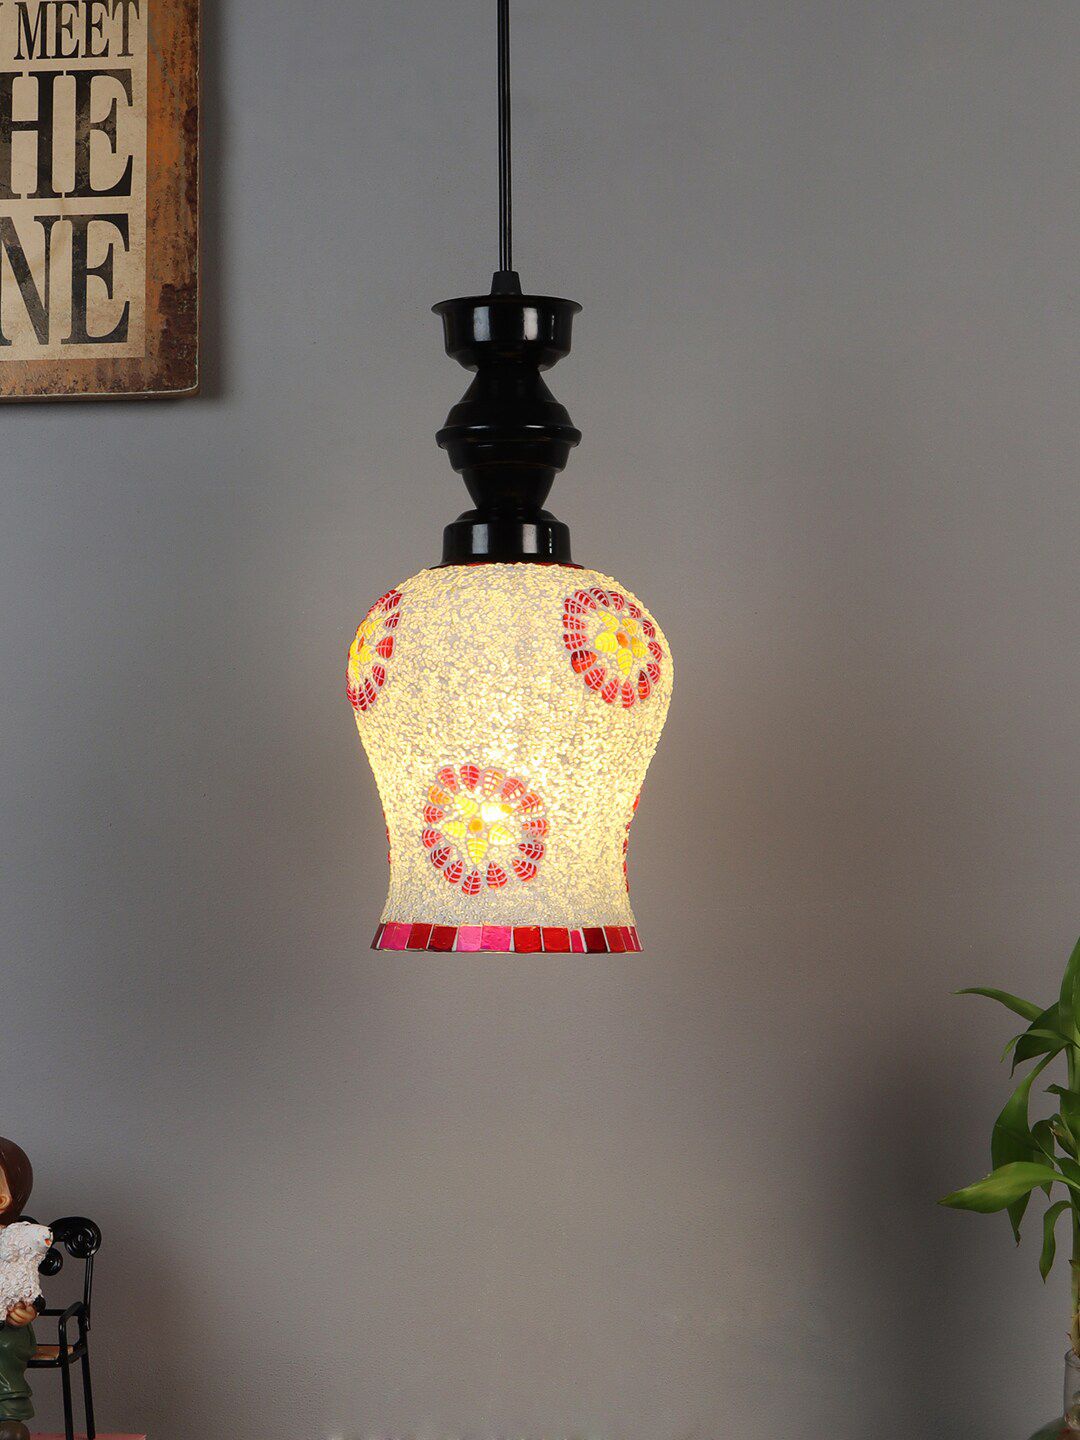 foziq Black & White Textured Contemporary Ceiling Lamp Price in India